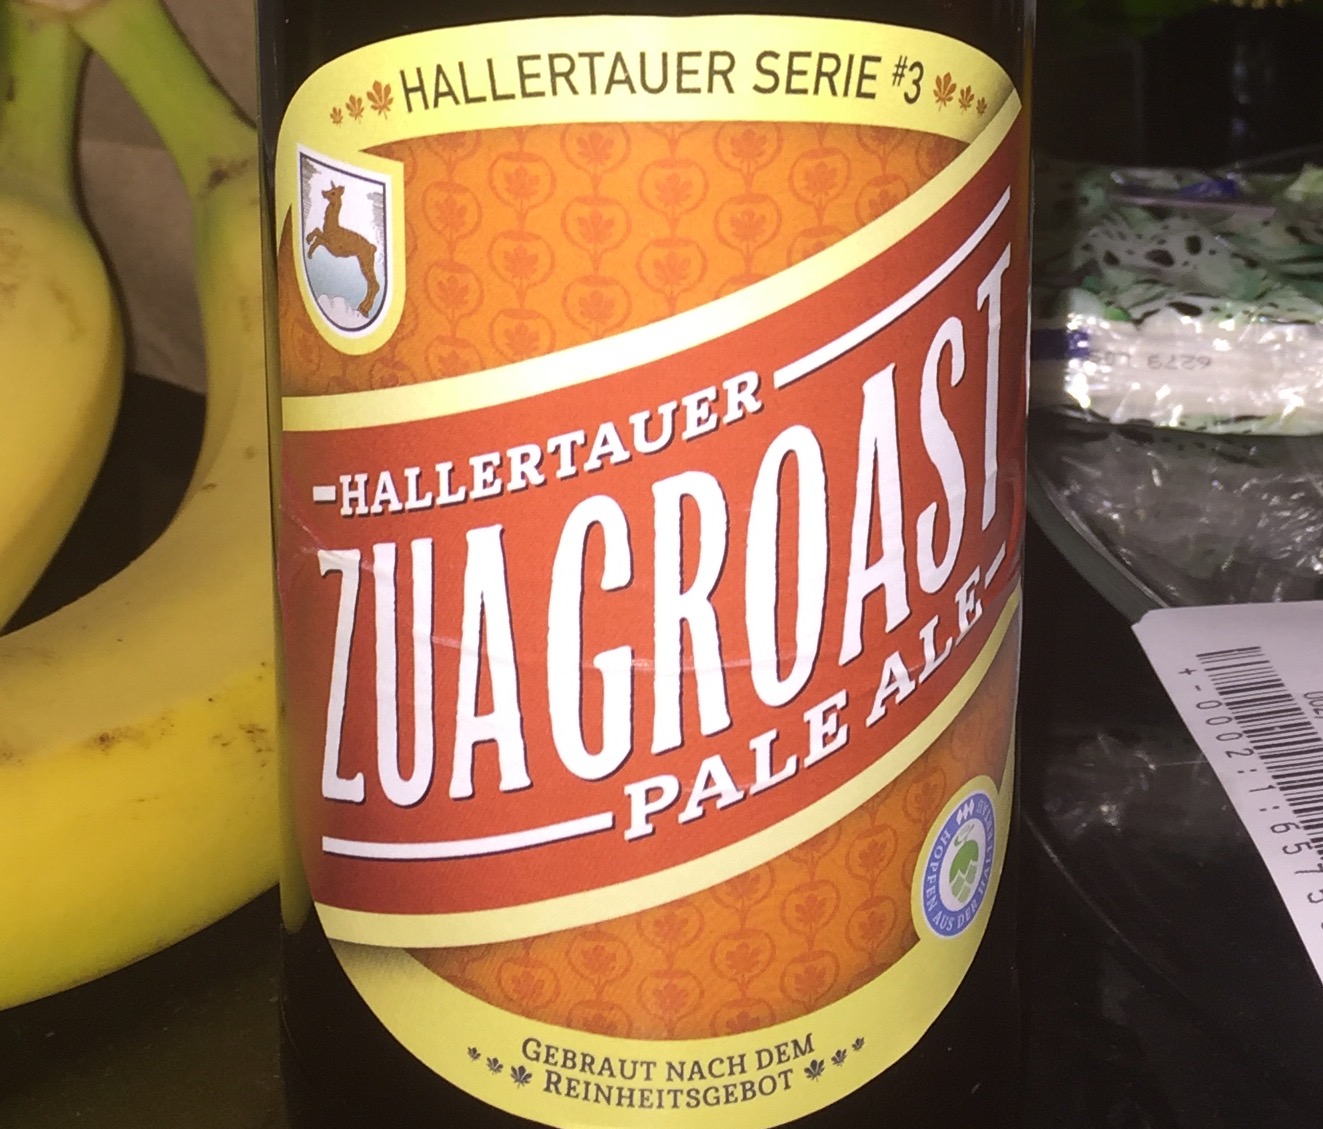 Hallertauer Zuagroast - Pale Ale